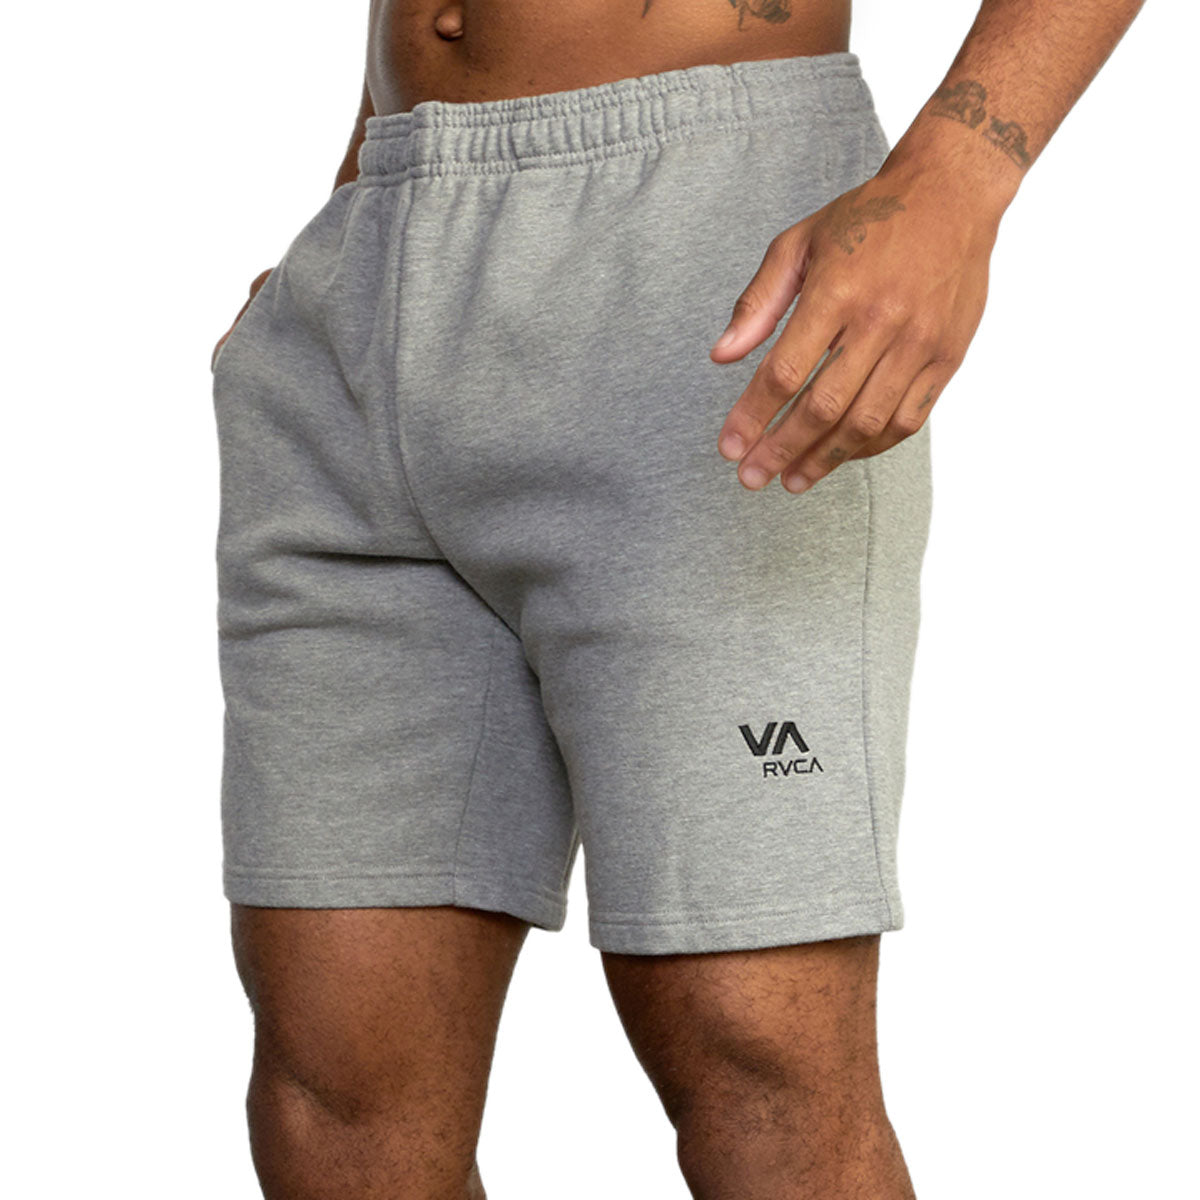 RVCA Va Essential Sweat Shorts - Light Marle image 2